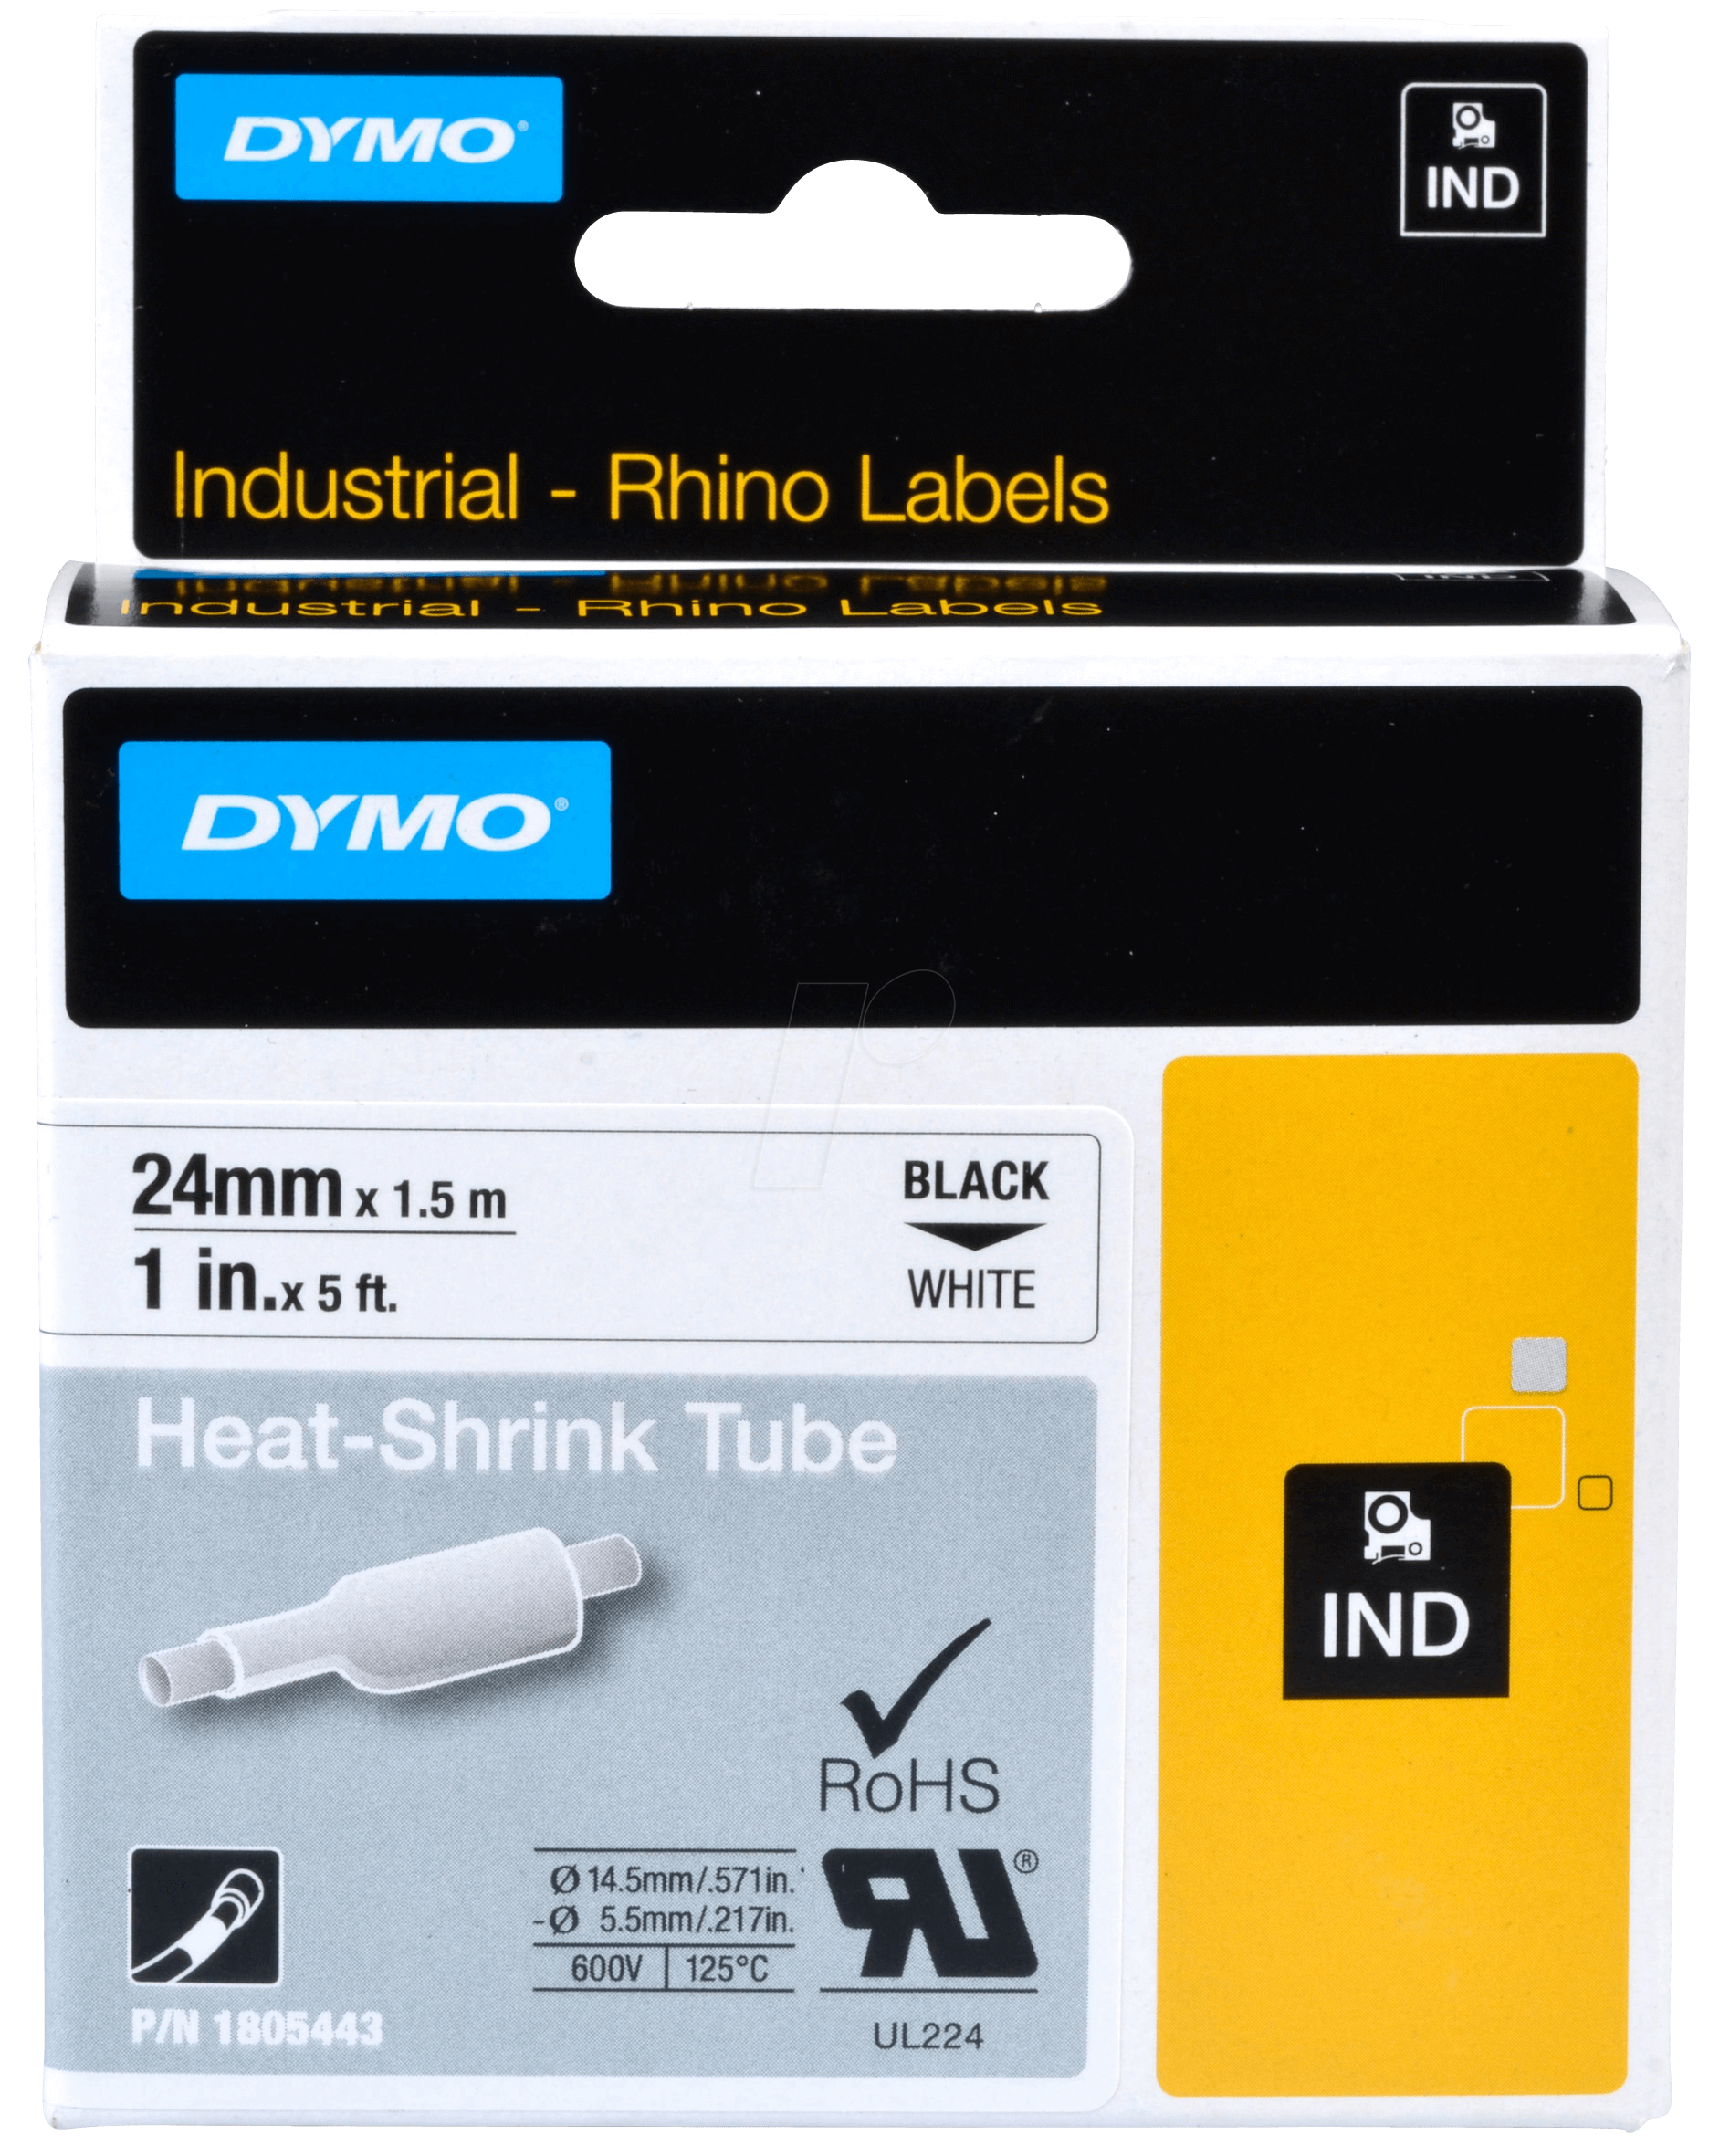 DYMO IND Heat-Shrink Tube Labels